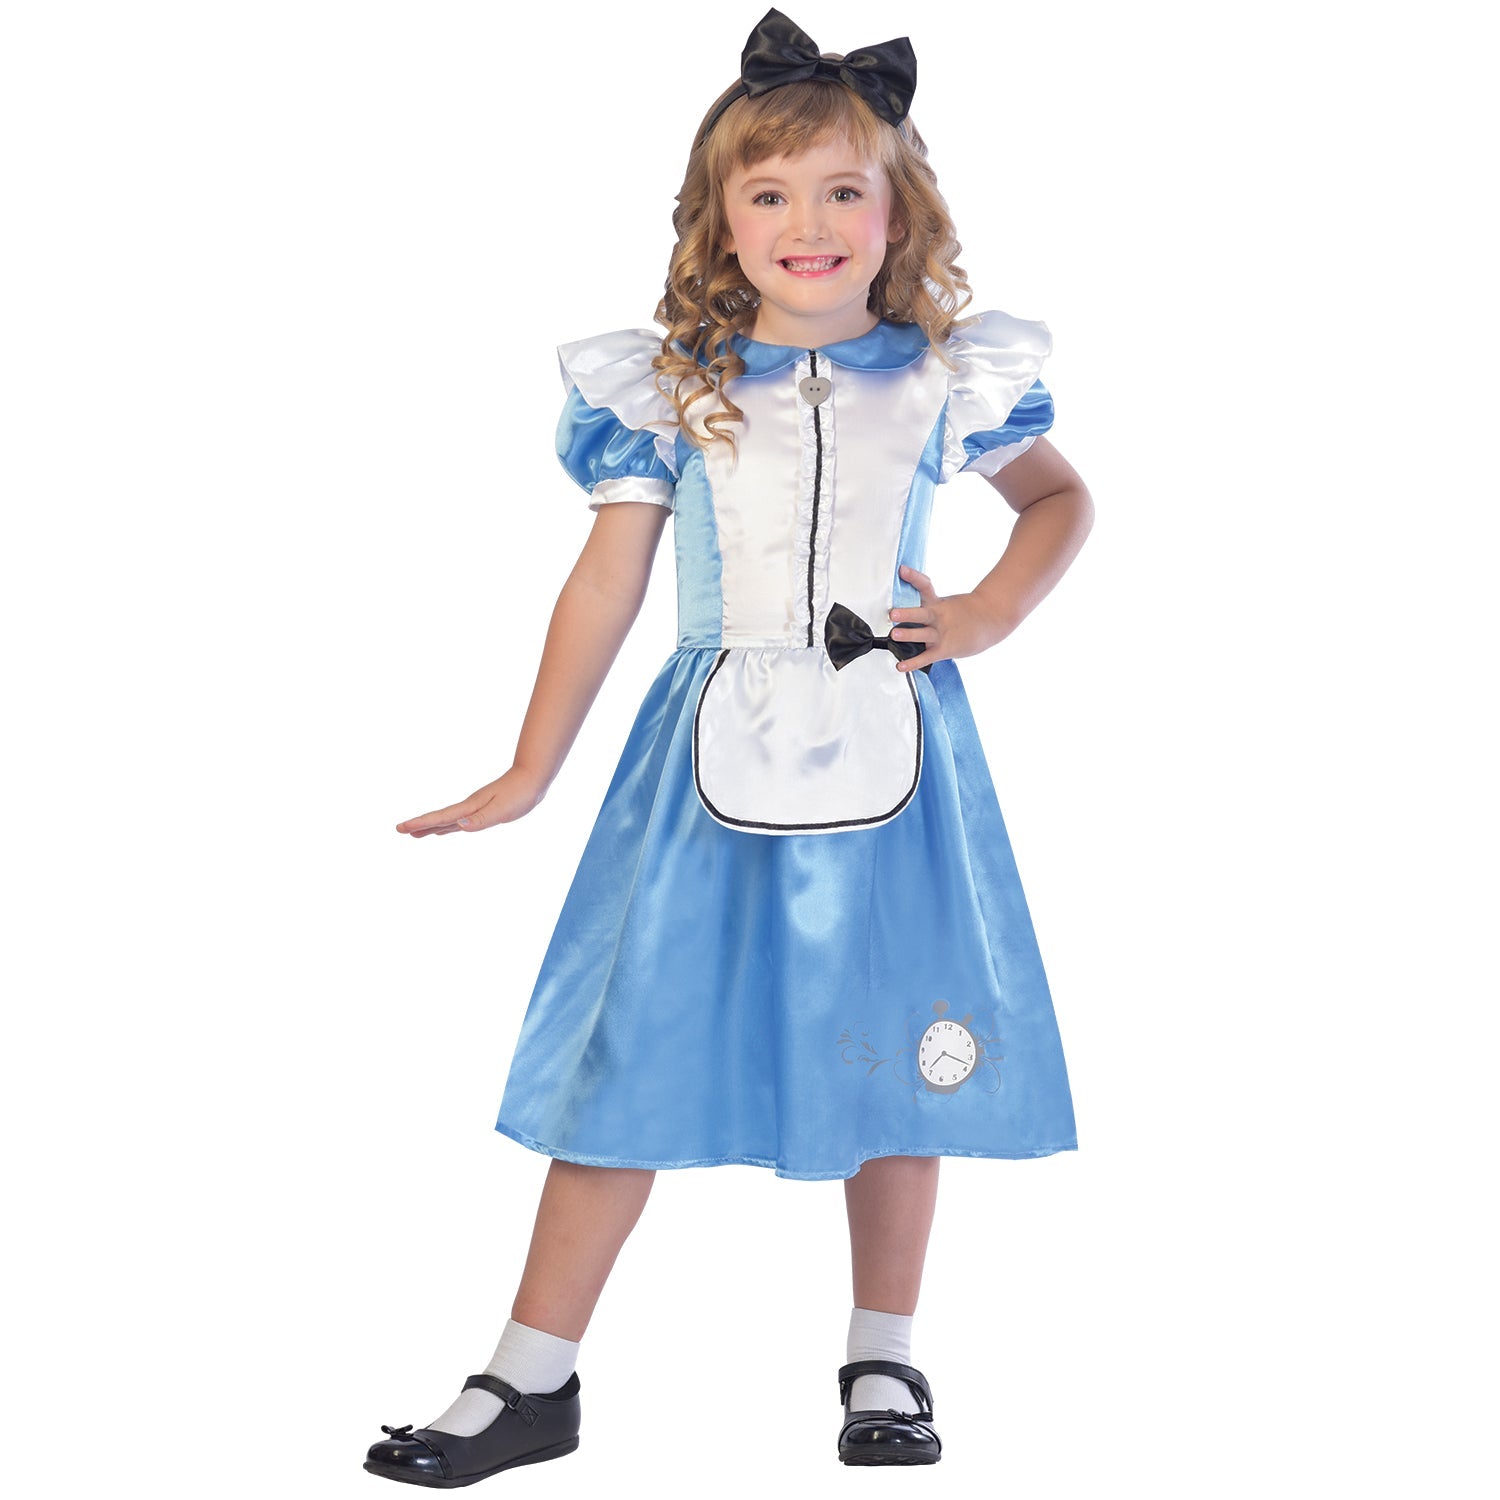 Girls Alice in Wonderland Costume includes dress and headband